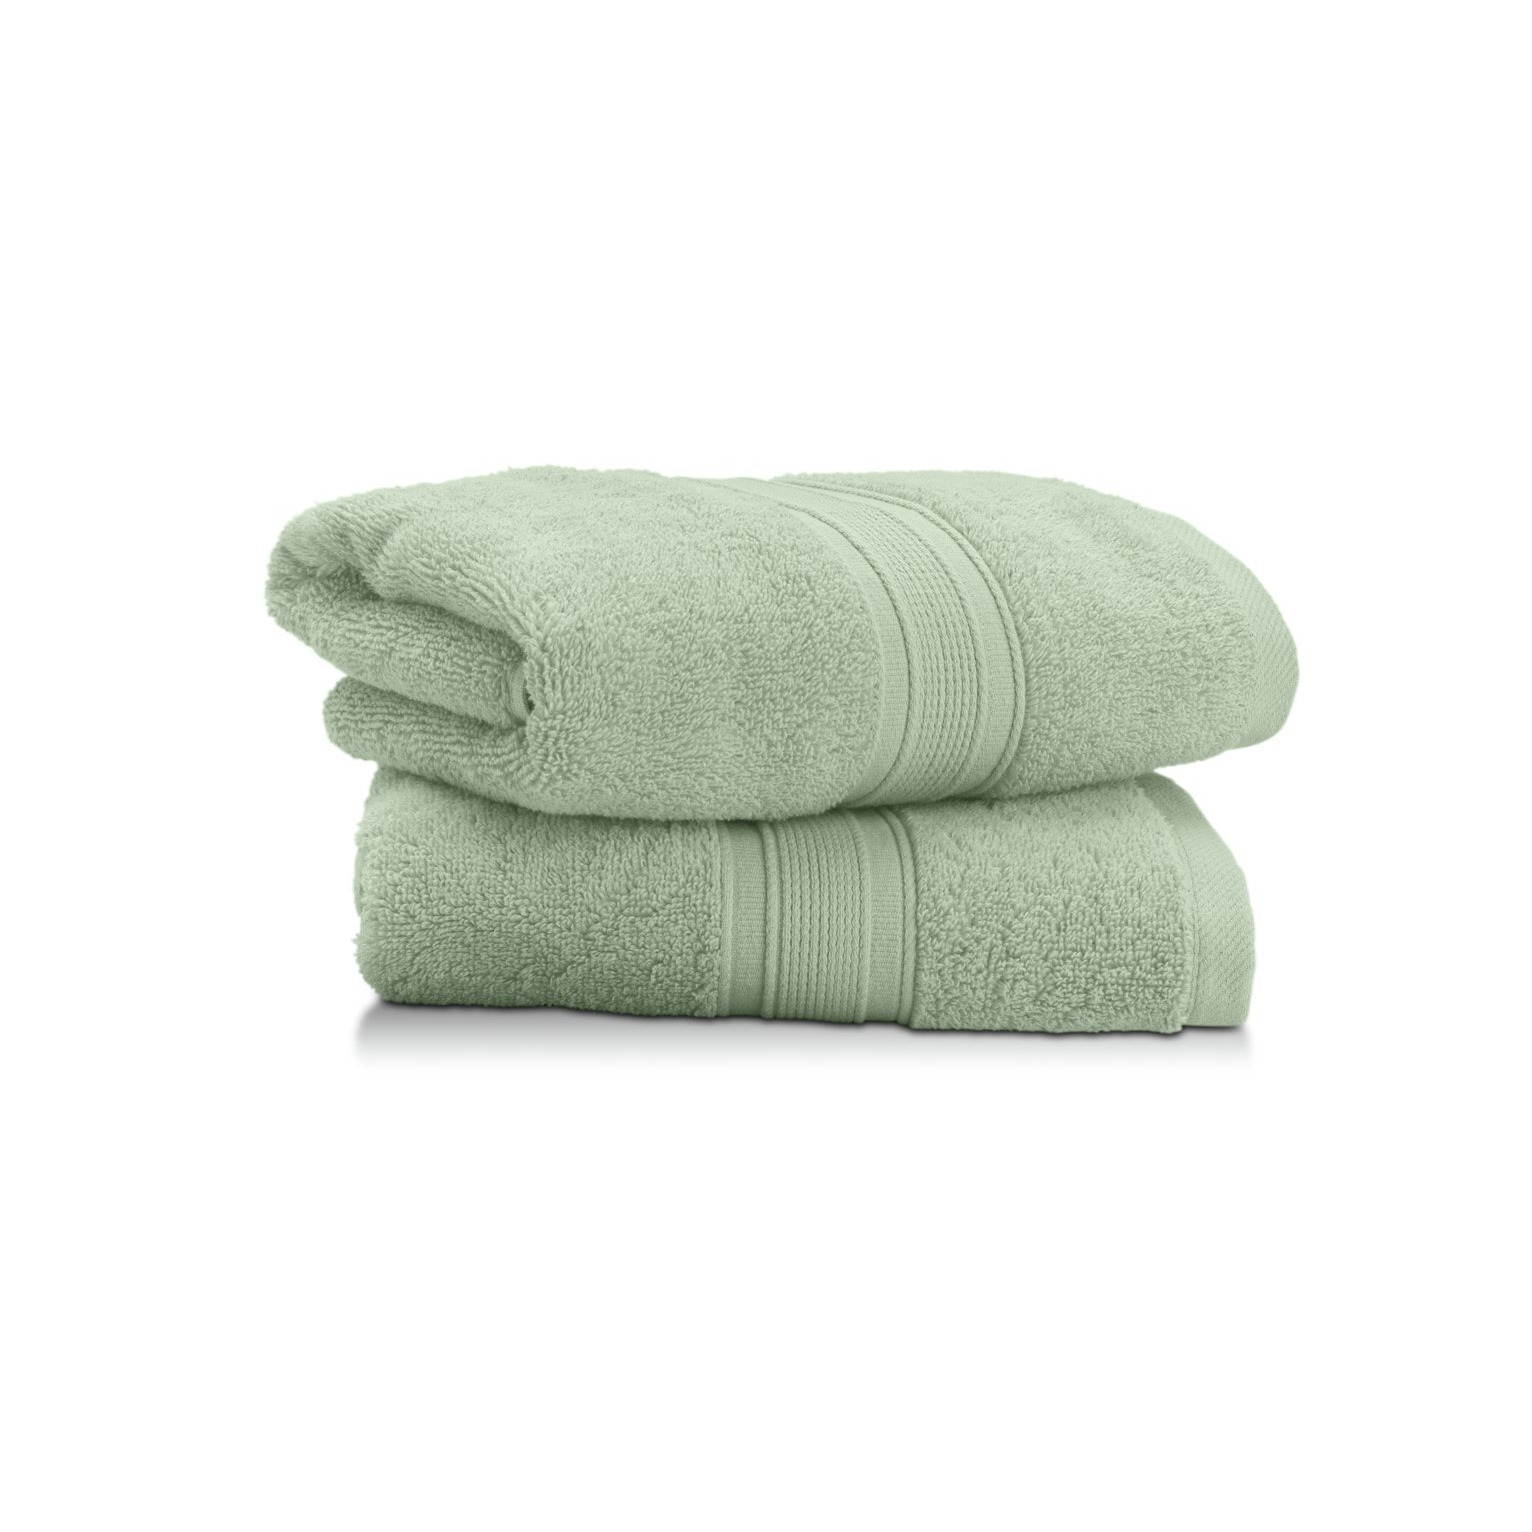 Habitat Supersoft Cotton 2 Pack Hand Towel - Green - image 1